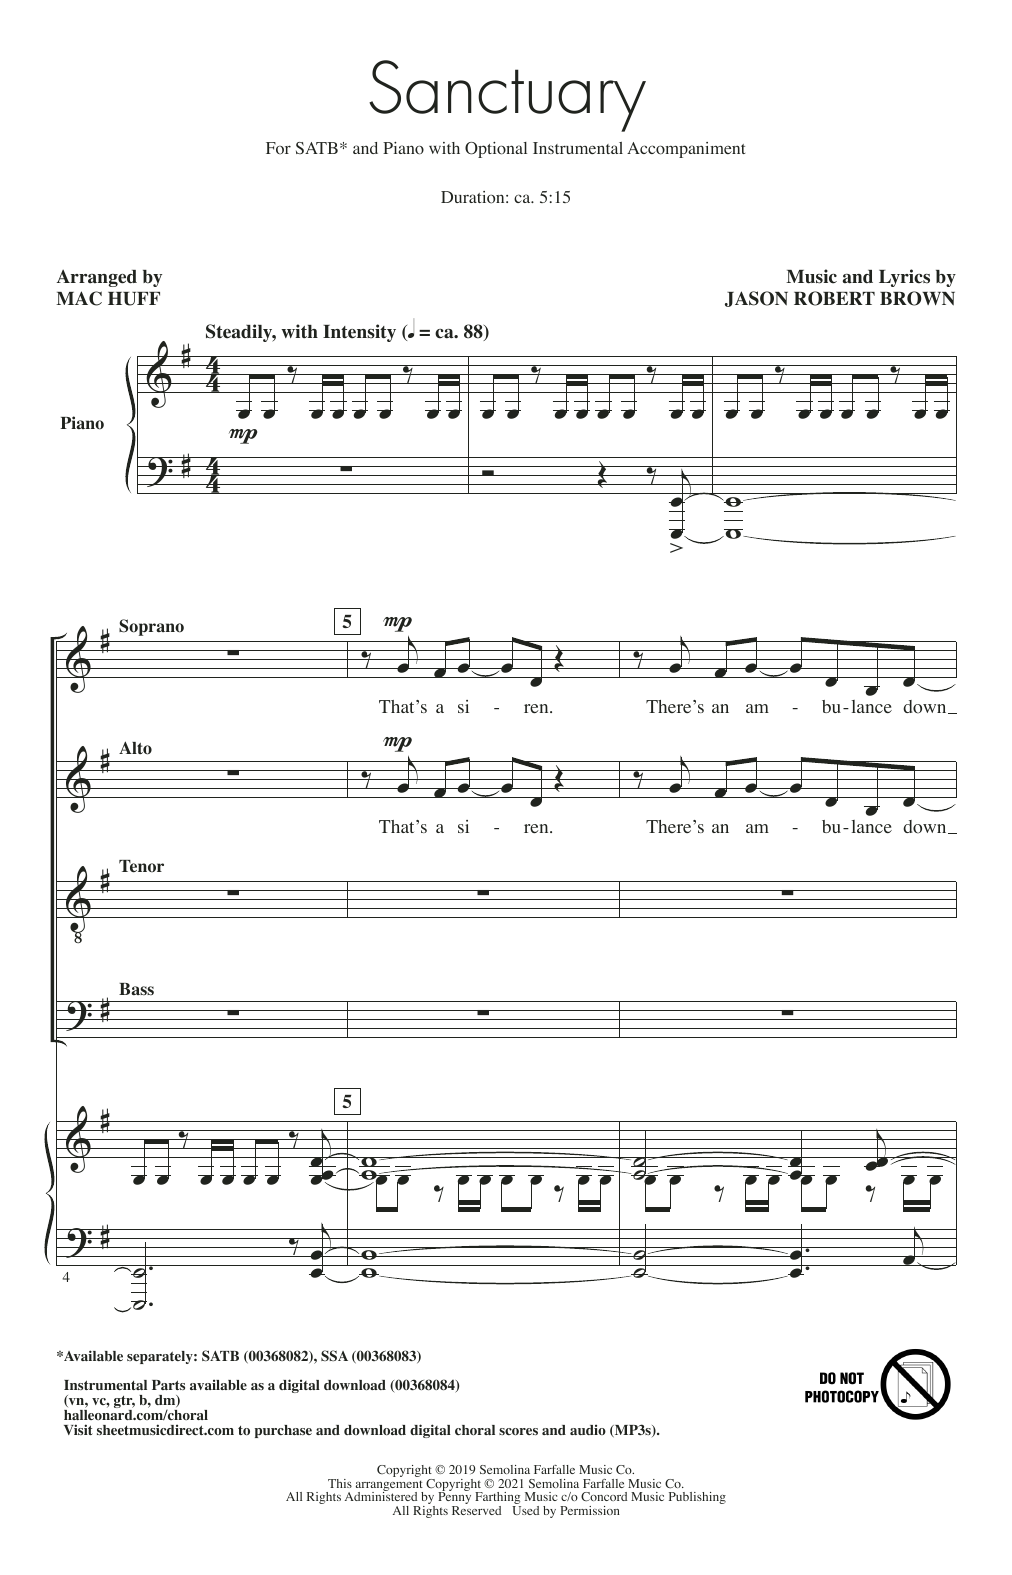 Jason Robert Brown Sanctuary (arr. Mac Huff) Sheet Music Notes & Chords for SSA Choir - Download or Print PDF